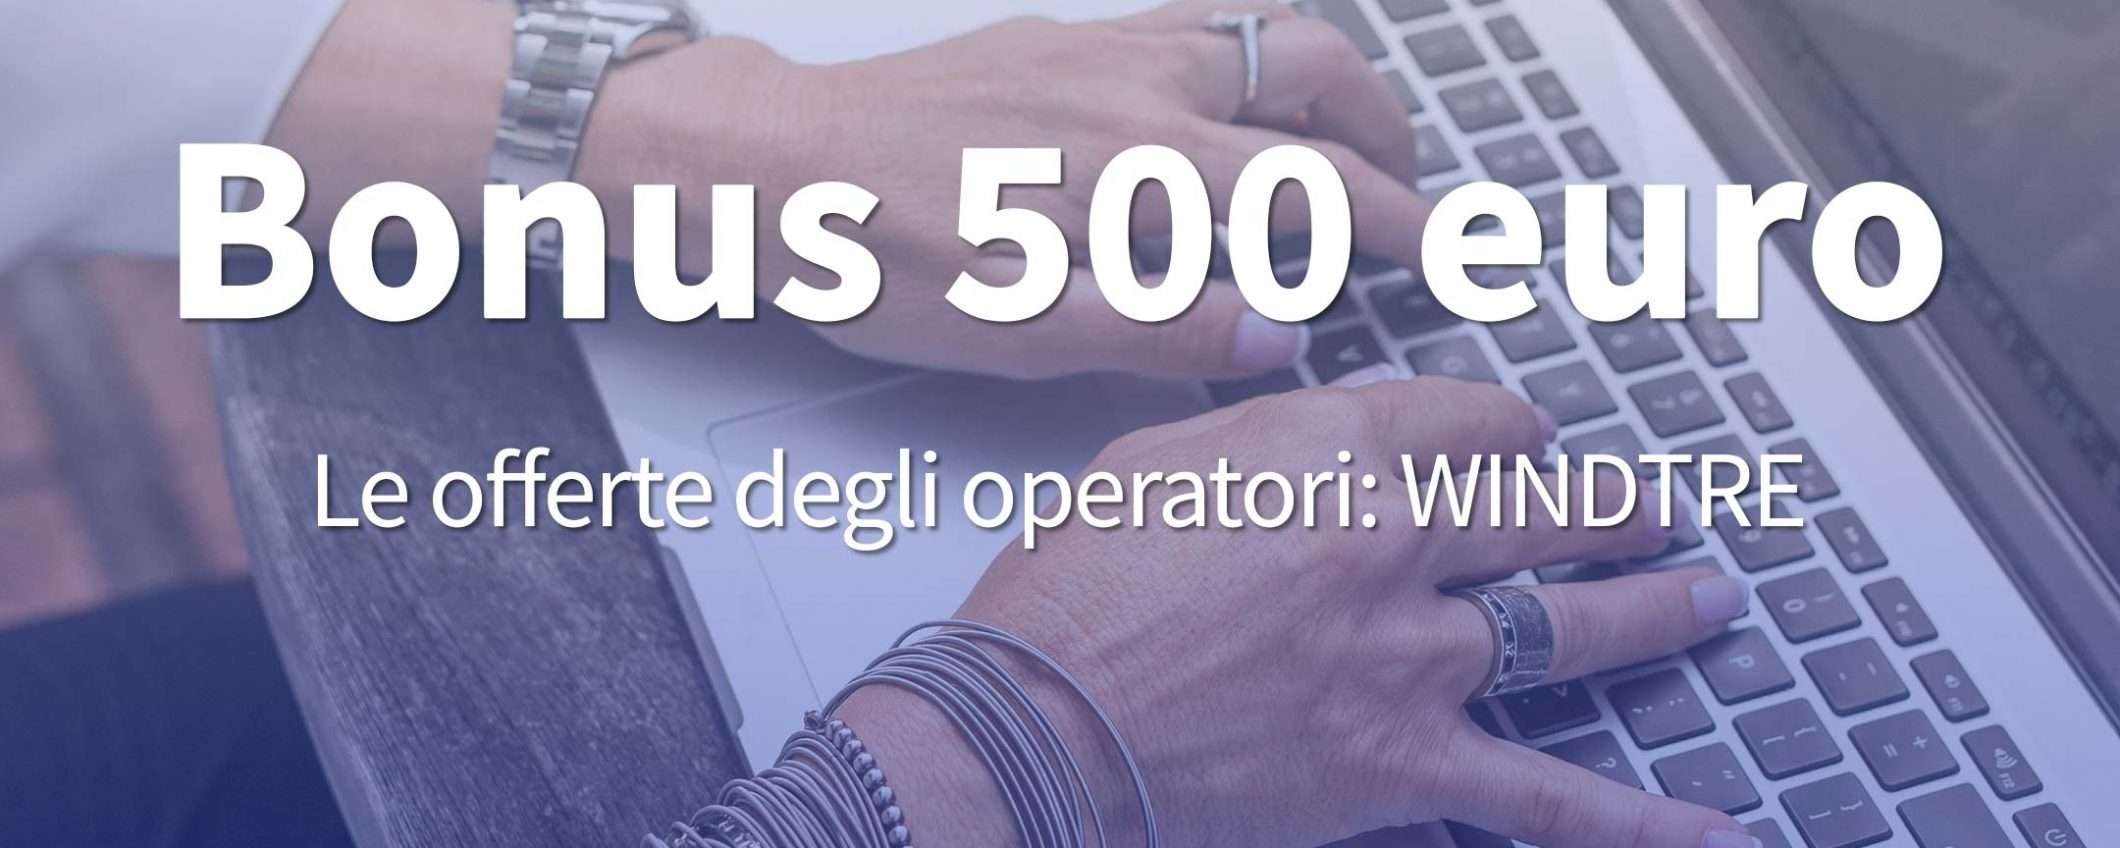 Bonus 500 euro: l'offerta WINDTRE Super Fibra